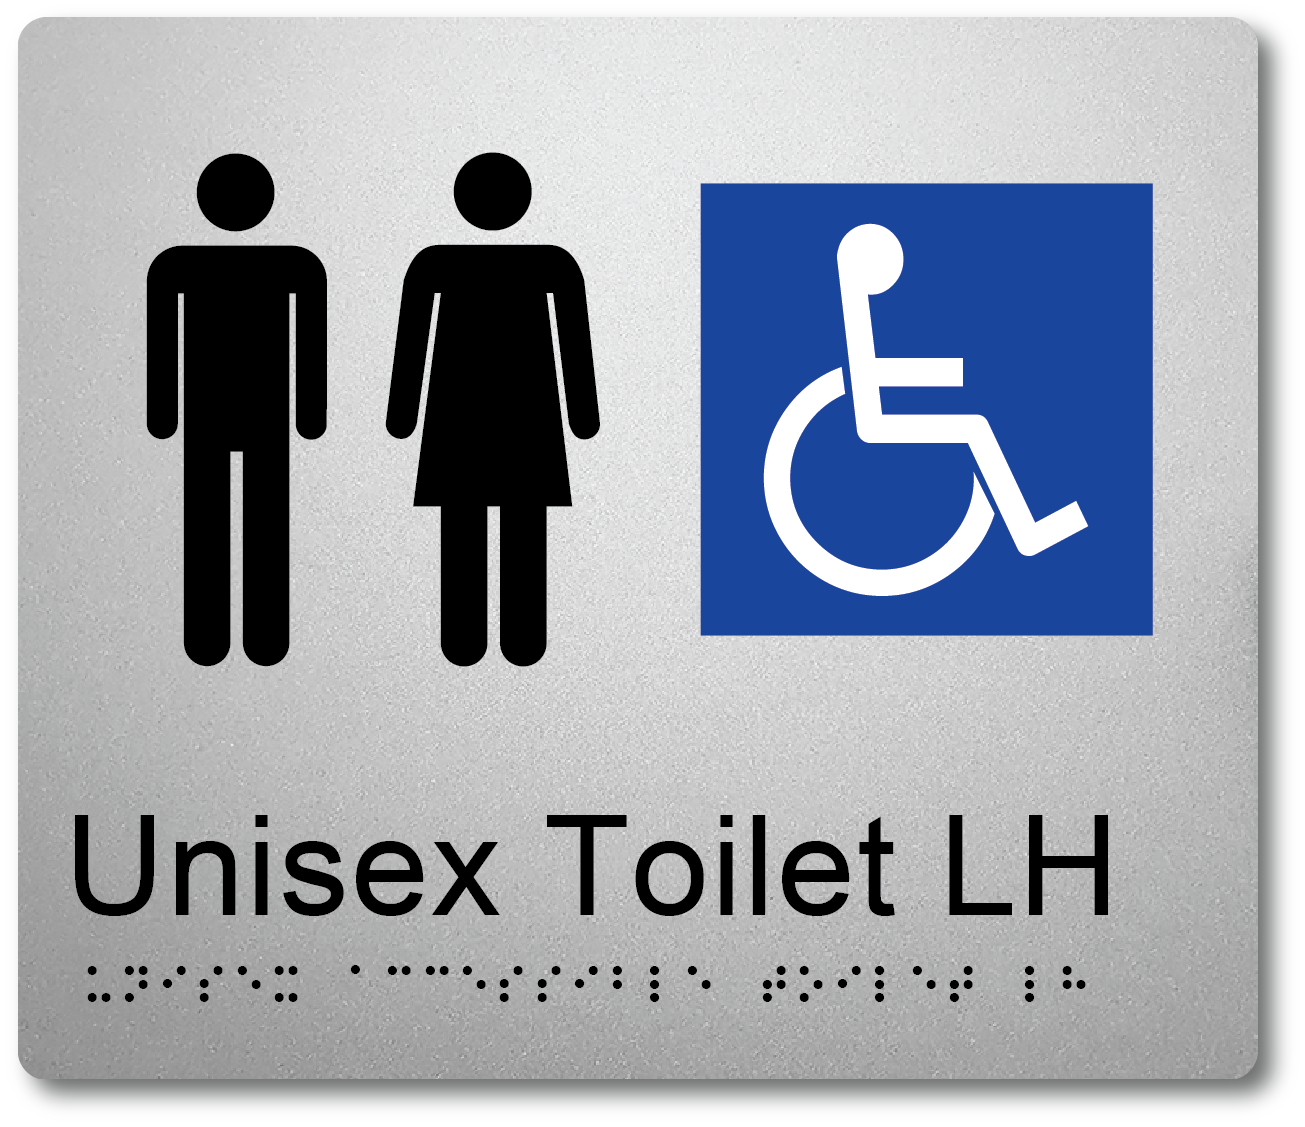 Unisex Toilet LH